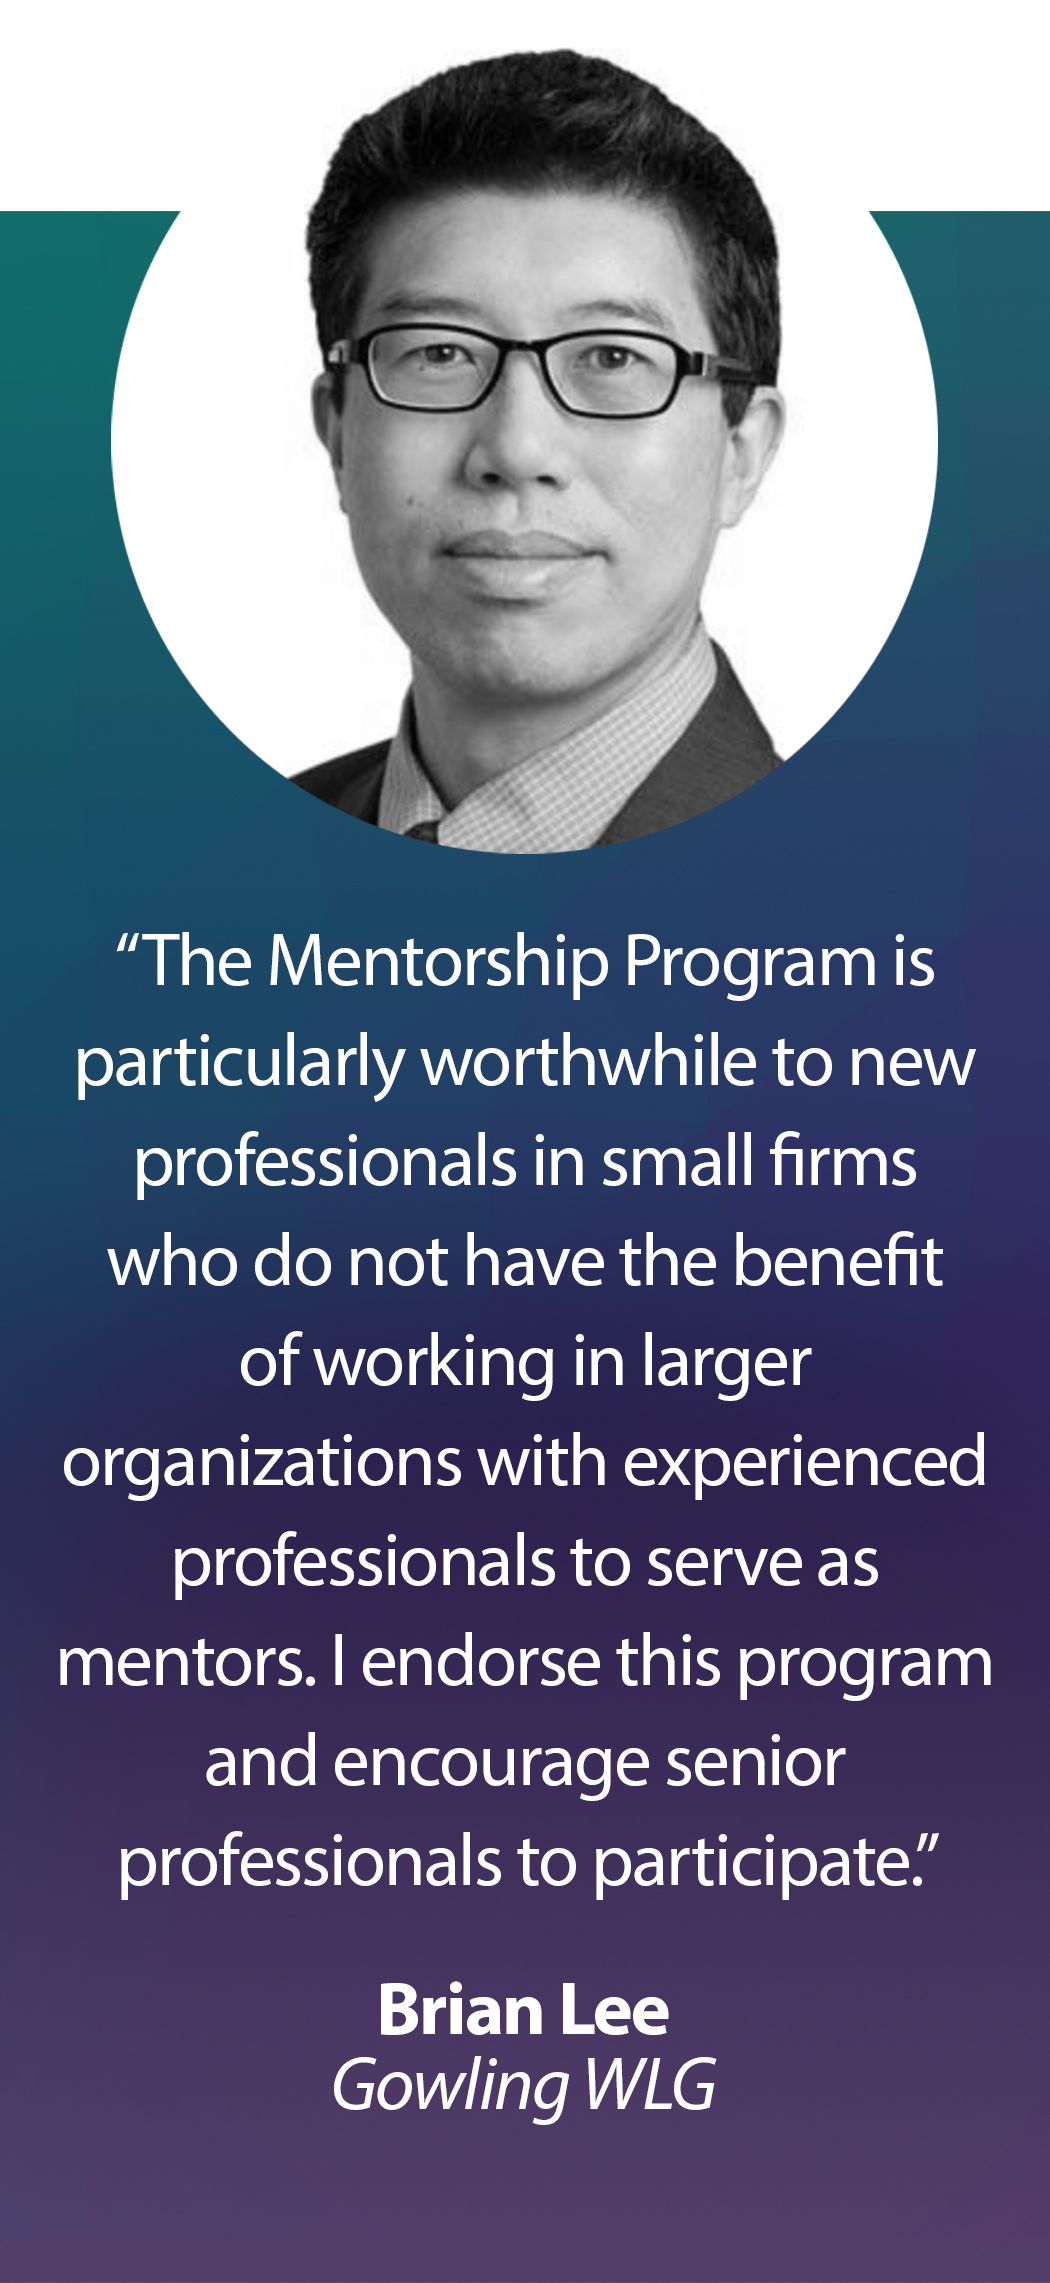 Mentorship Program - Mark Penner - Mentor